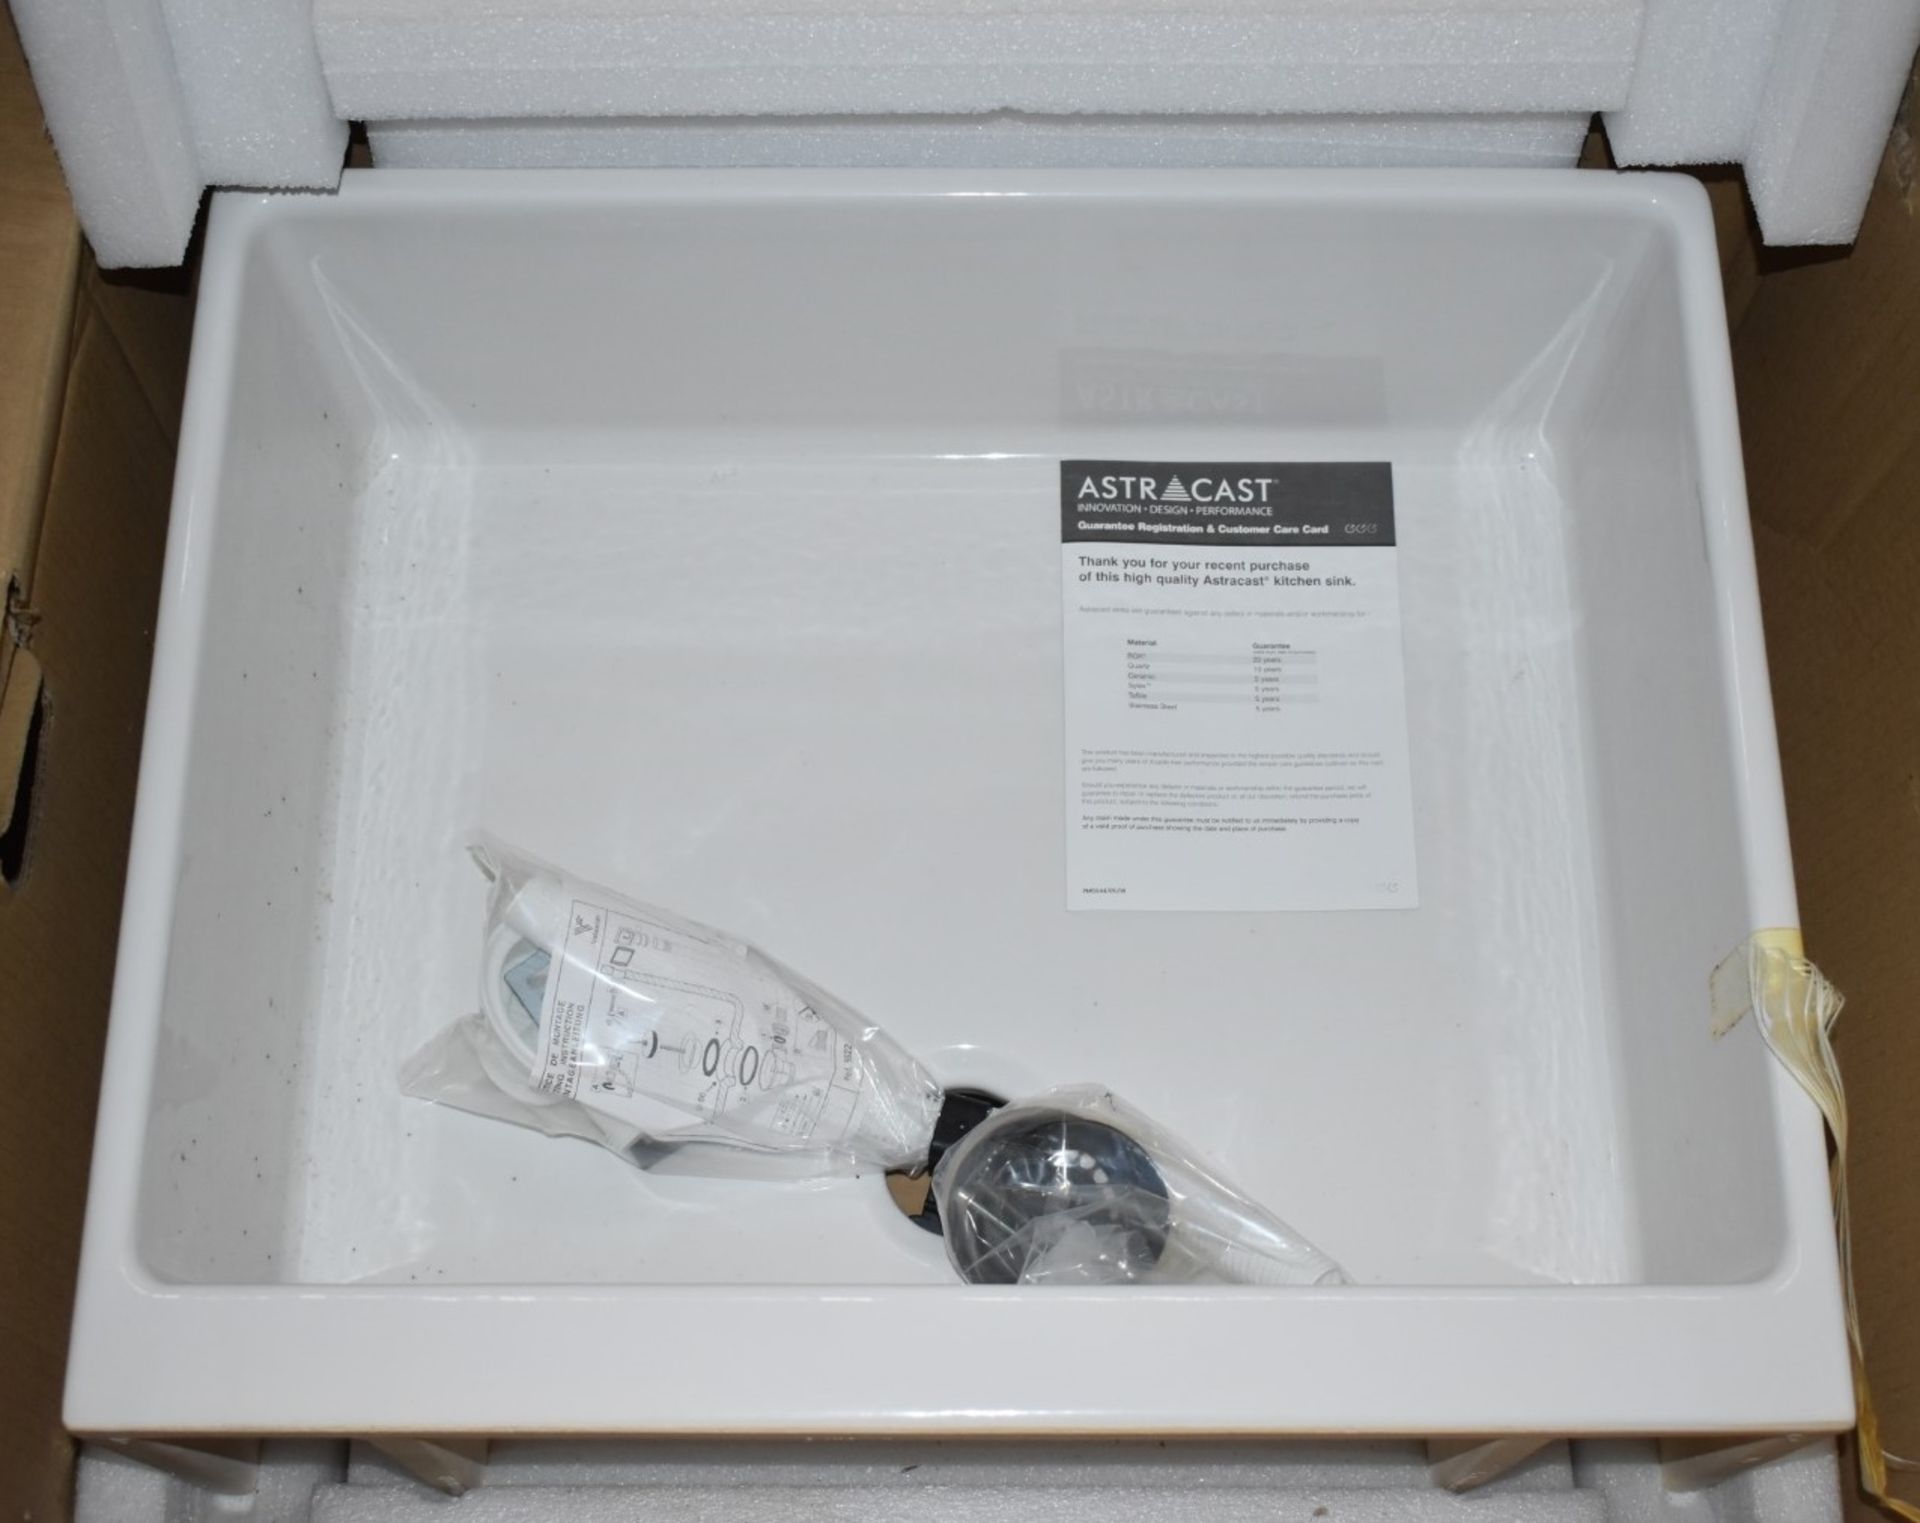 1 x Astracast Sudbury 1.0 White Ceramic Kitchen Sink With Chrome Waste Kit - New Boxed Stock - H20 x - Image 4 of 7